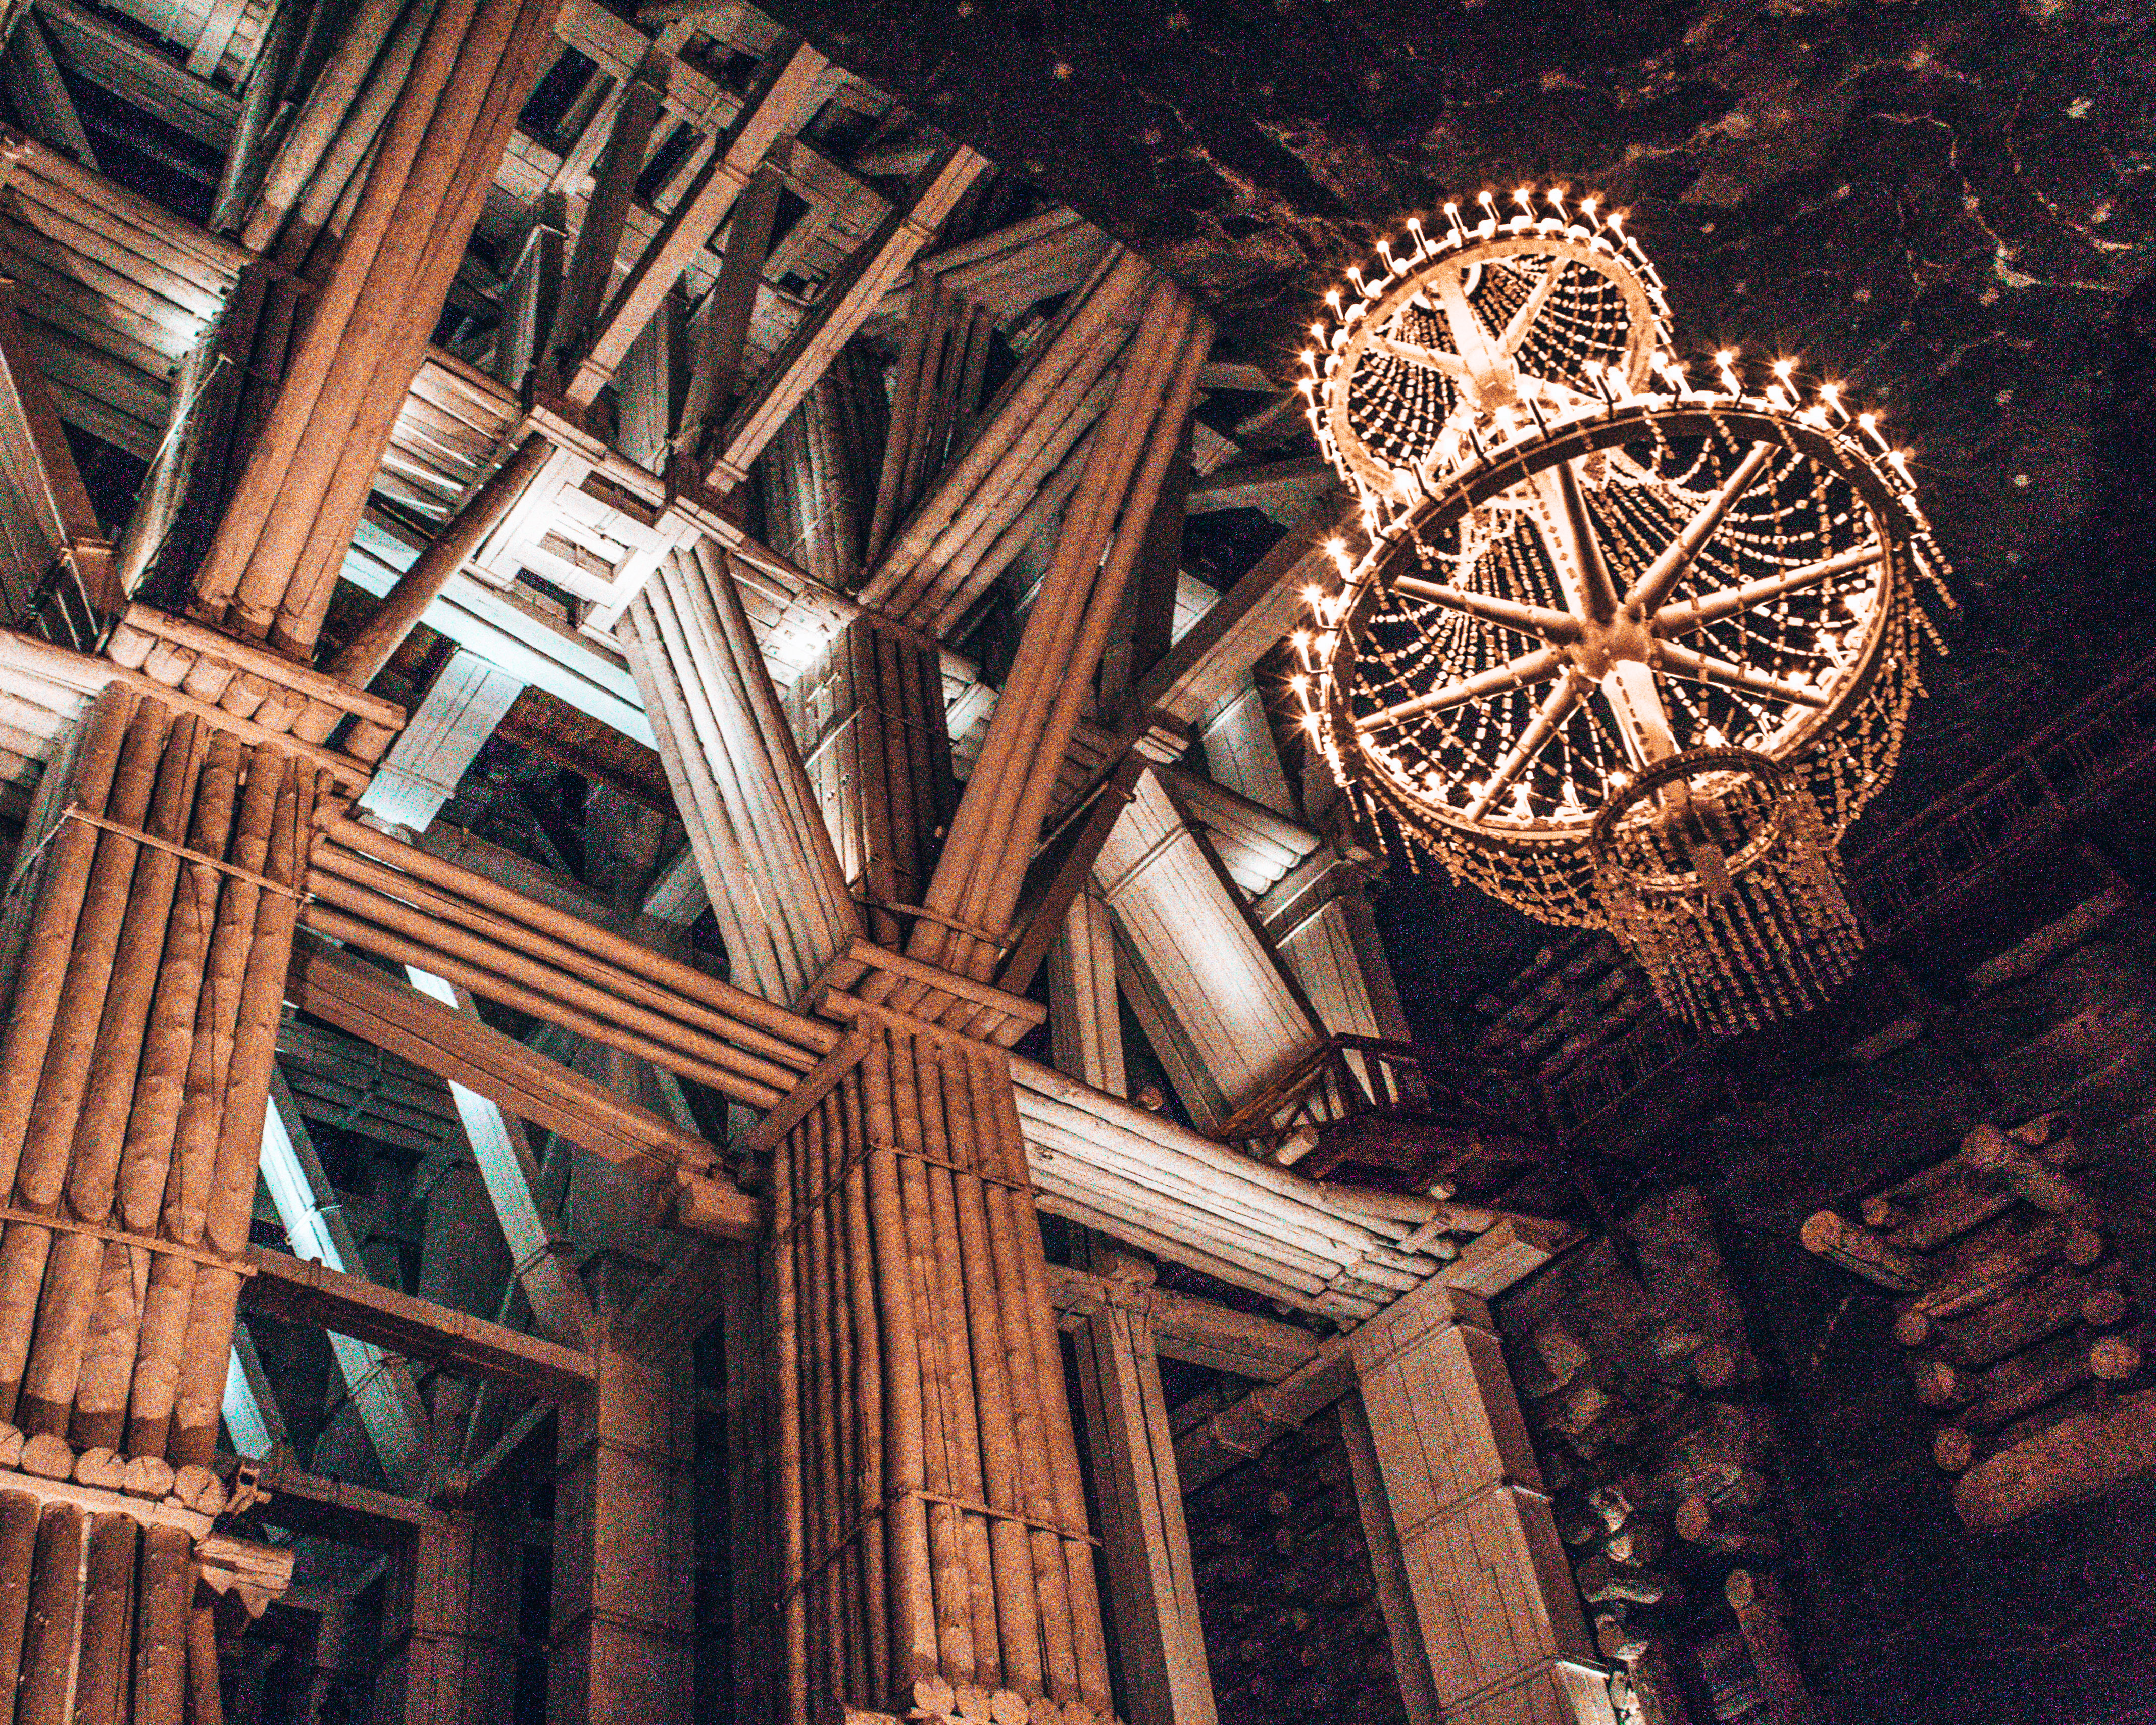 The largest chandelier in the Wielicska salt mines in Wielicksa, Poland